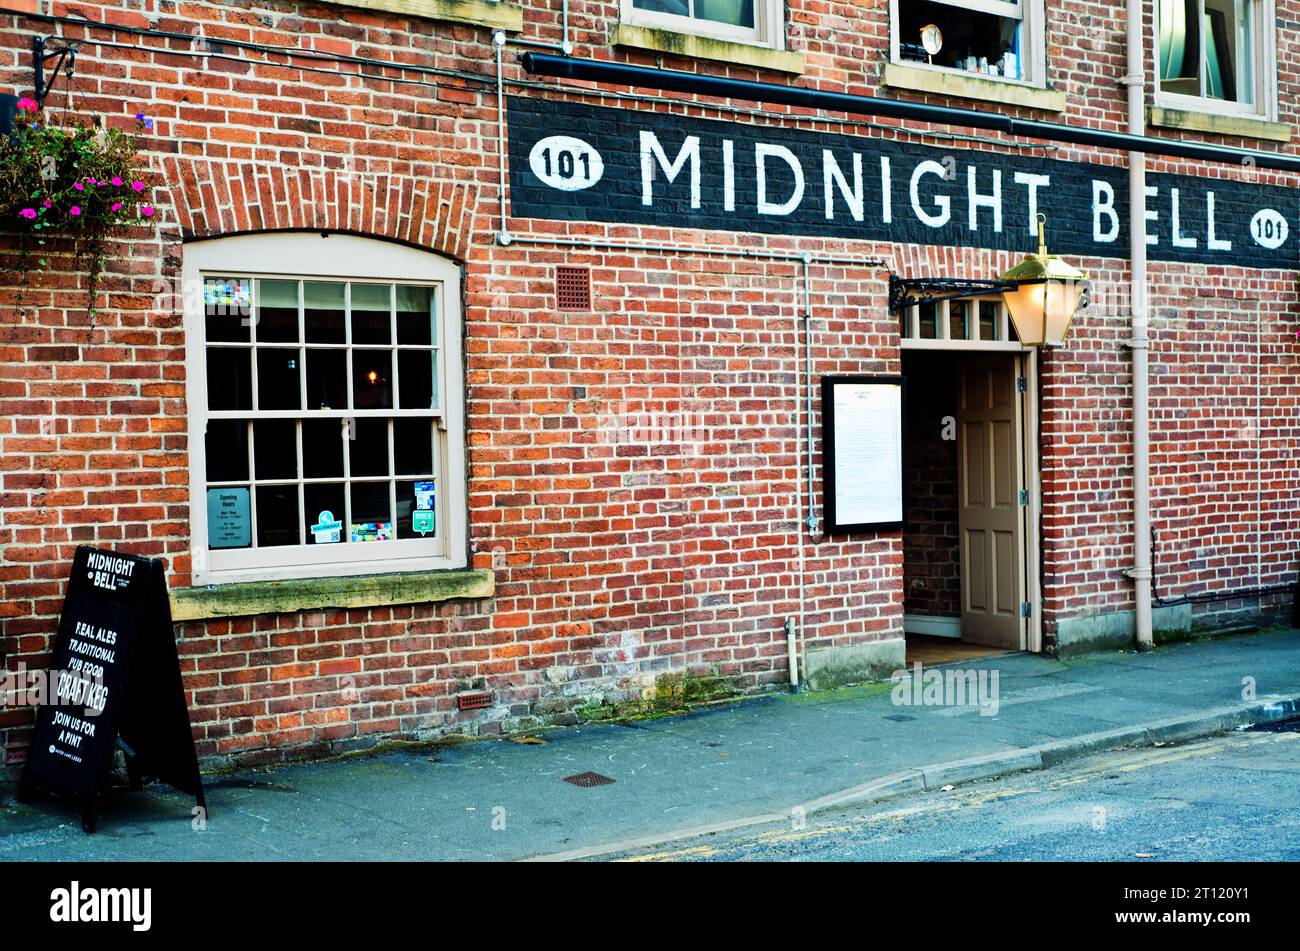 Midnight Bell pub, Water Lane, Holbeck, Leeds, England Stock Photo